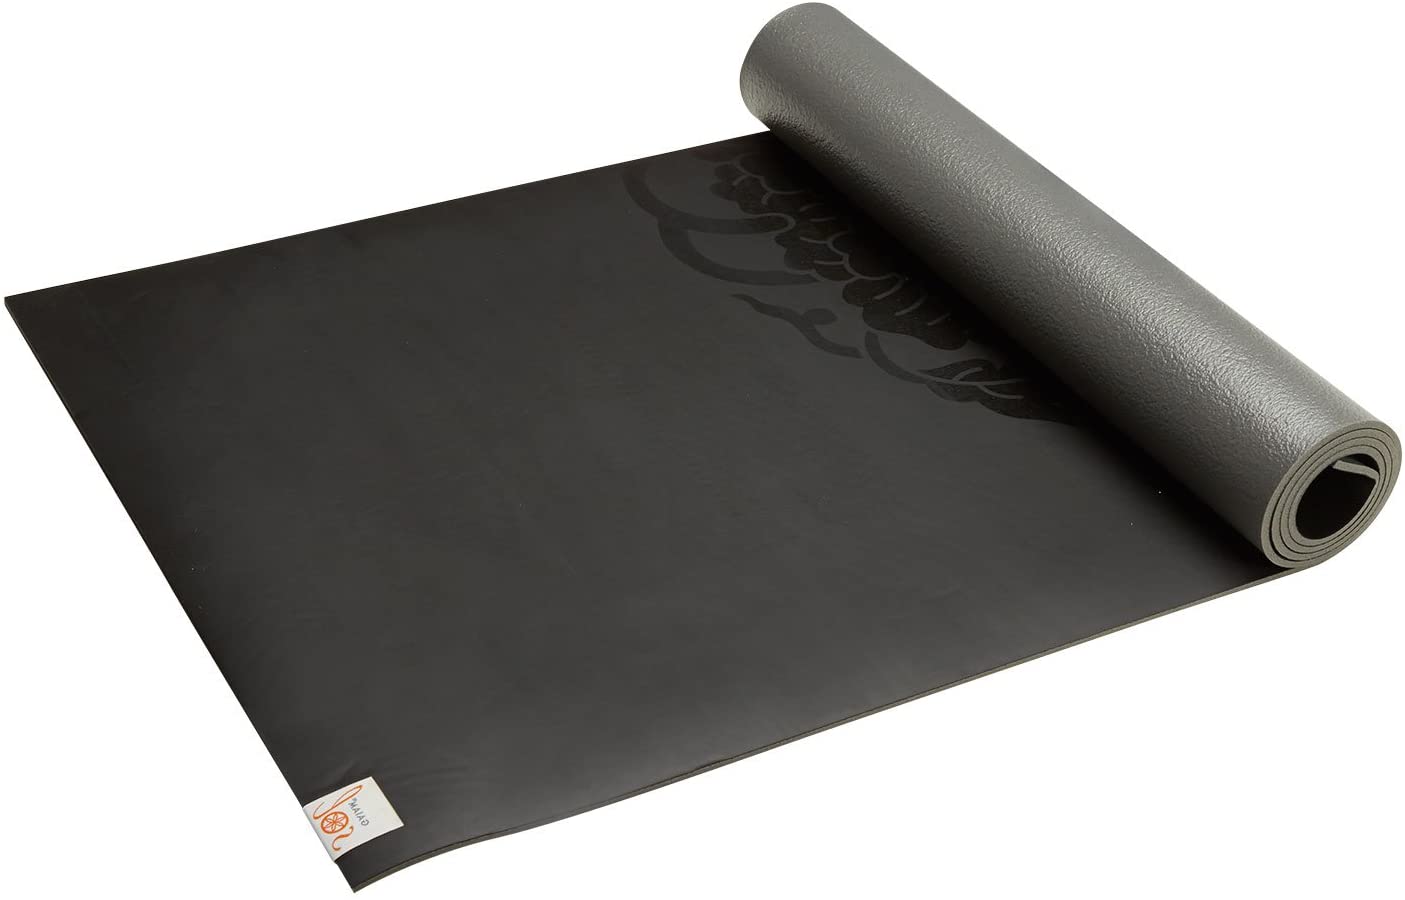 Liforme Extra Large Yoga Mat - Black